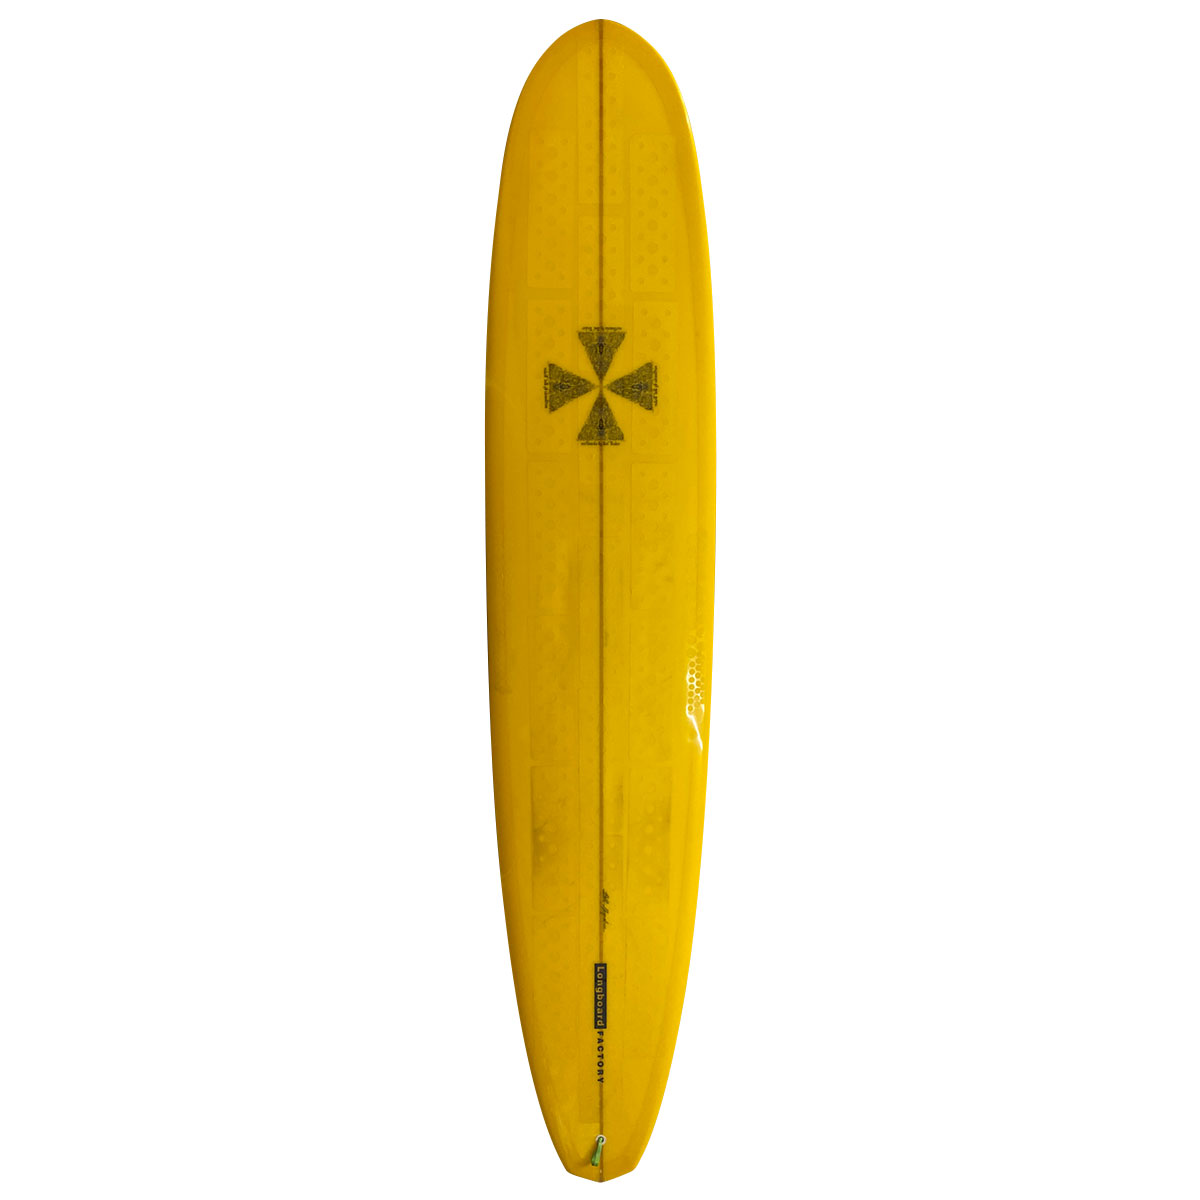 JOEL TUDOR SURFBOAD / JOEL TUDOR SURFBOARD / DIAMOND TAIL shaped by BILL SHROSBREE 9`0